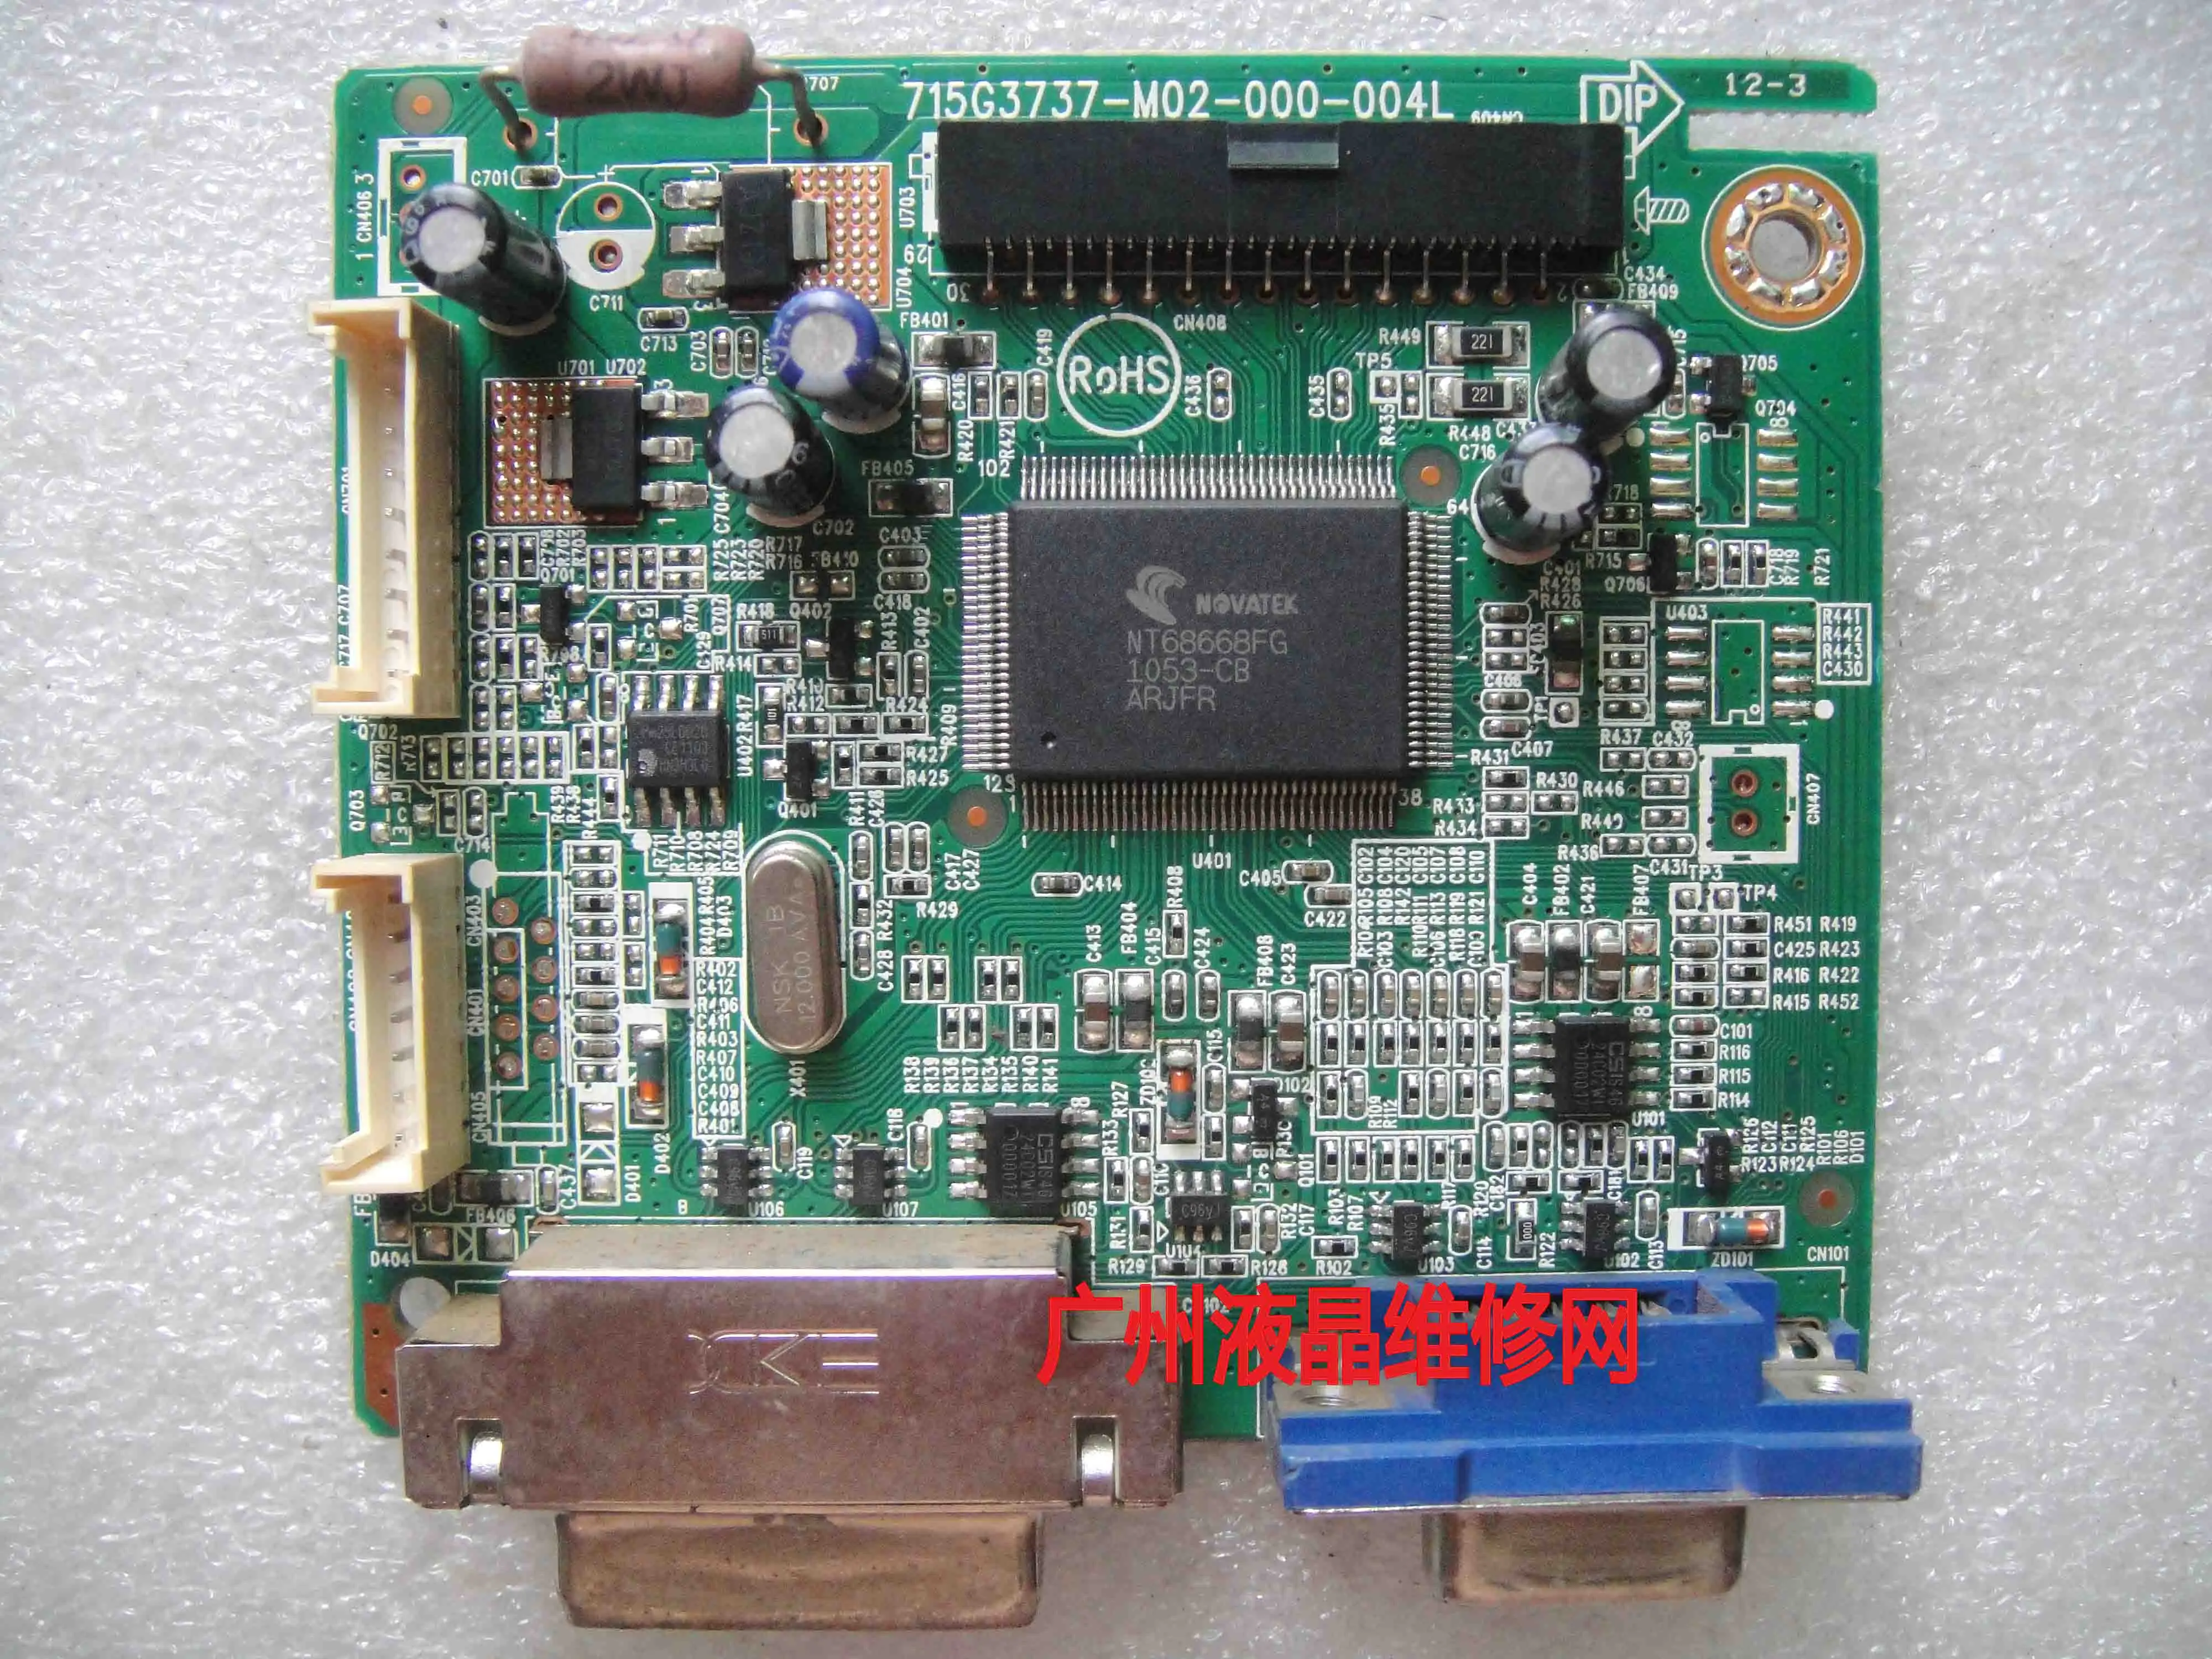 

Original 220S driver board 220S2 SB/93 LCD driver board 715G3737-M02-000-004L display motherboard